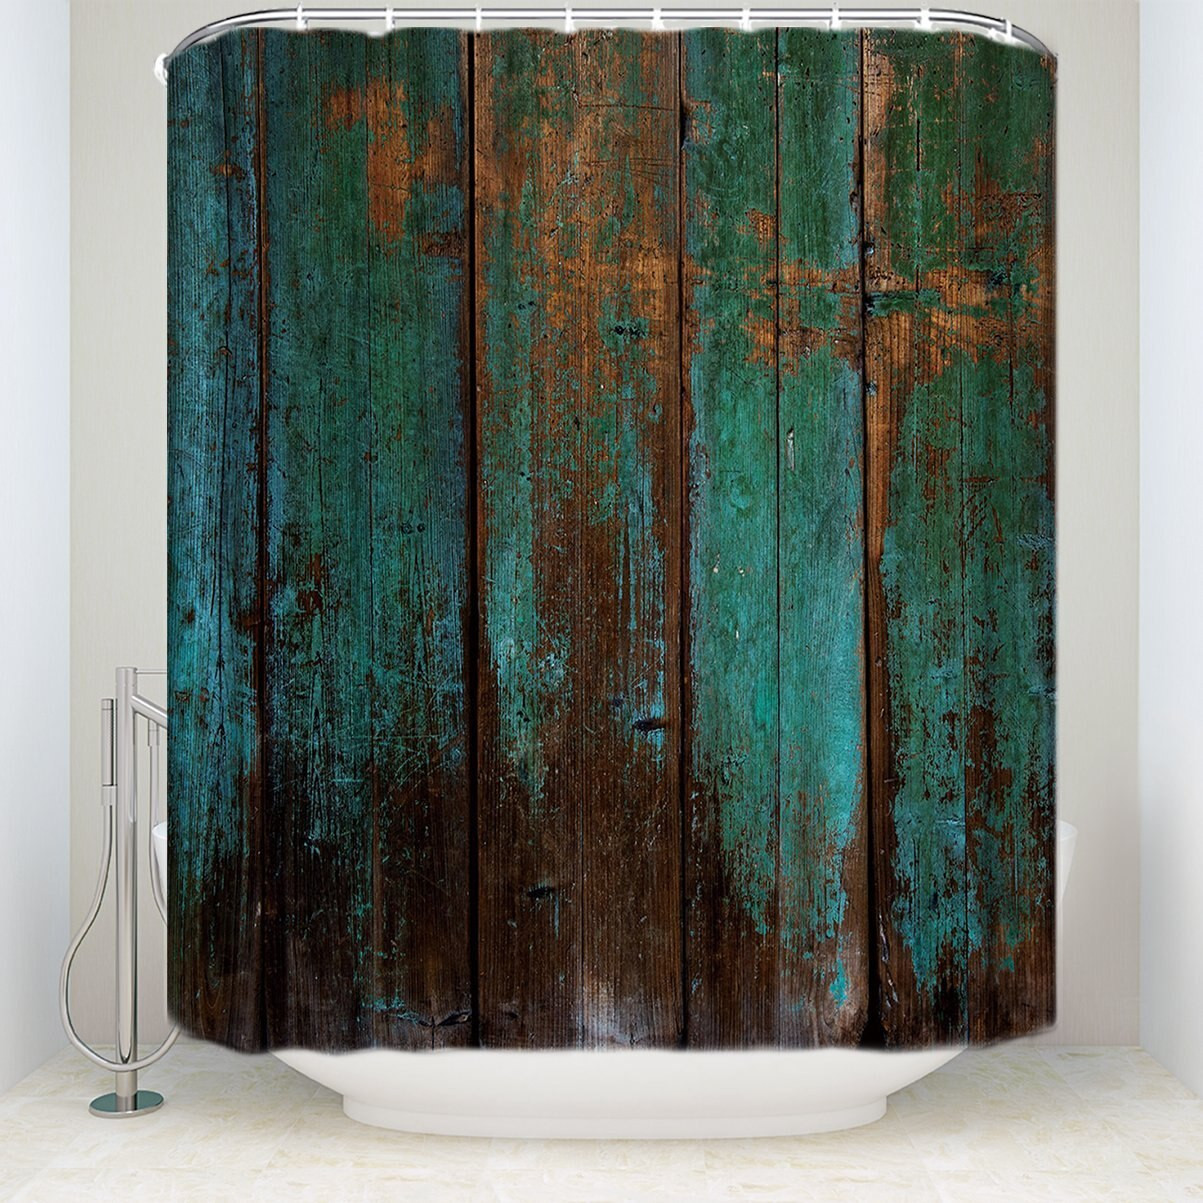 Rustic Bathroom Shower Curtain
 Aliexpress Buy Extra Long Fabric Bath Shower